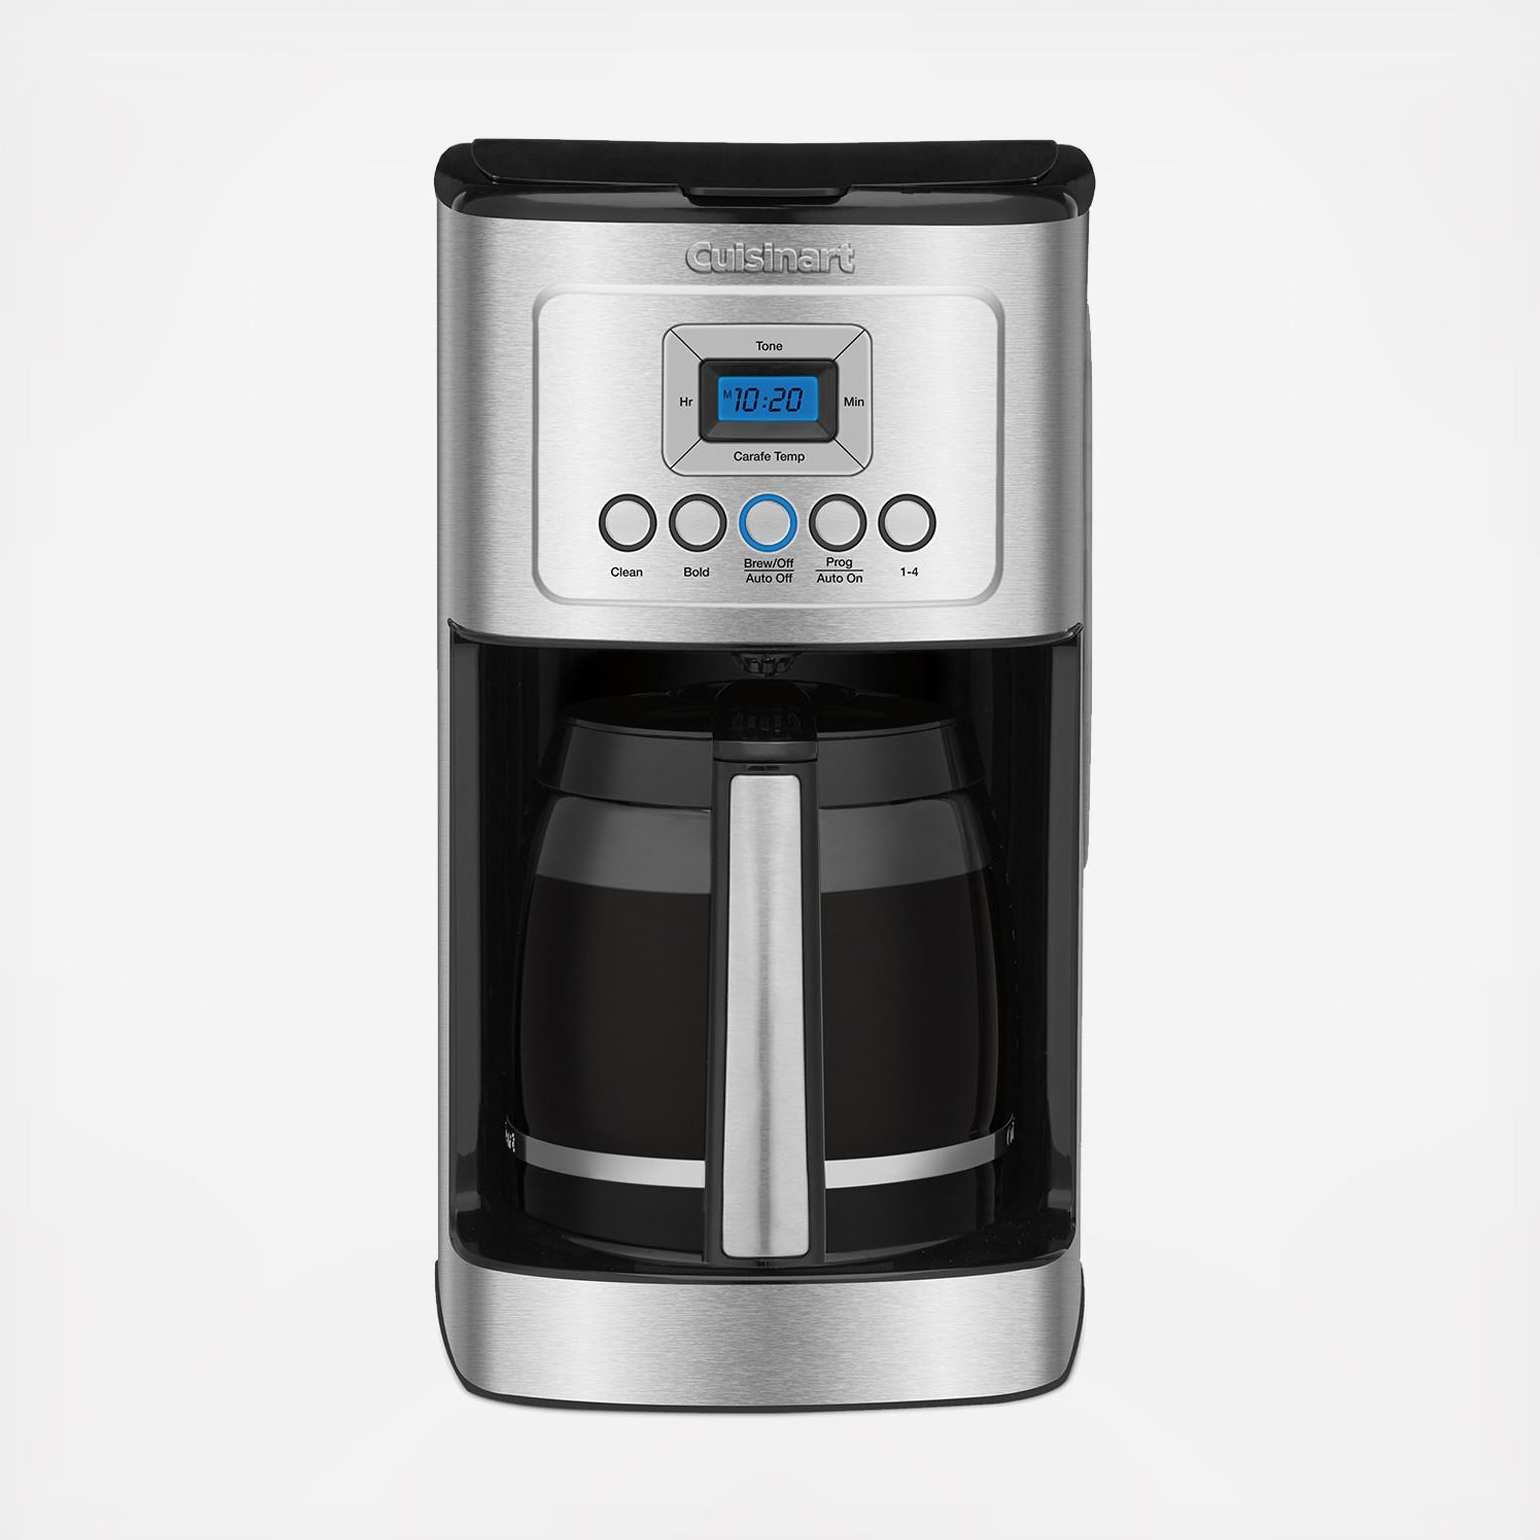 Cuisinart-PerfecTemp-14-Cup-Programmable-Coffee-Maker